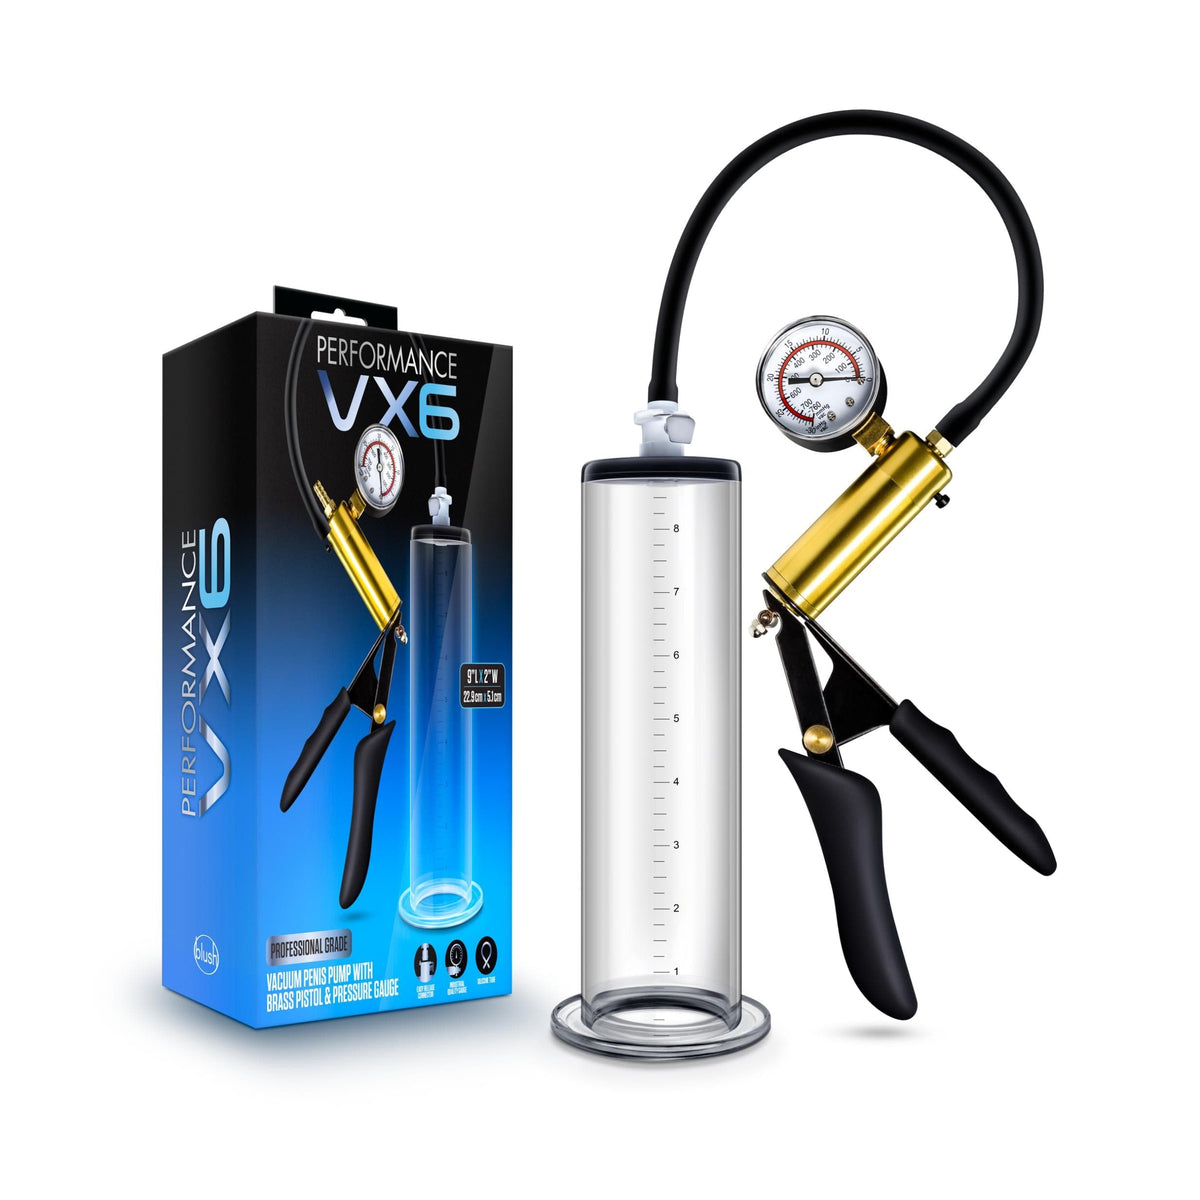 performance vx6 vacuum penis pump with brass pistol pressure gauge clear